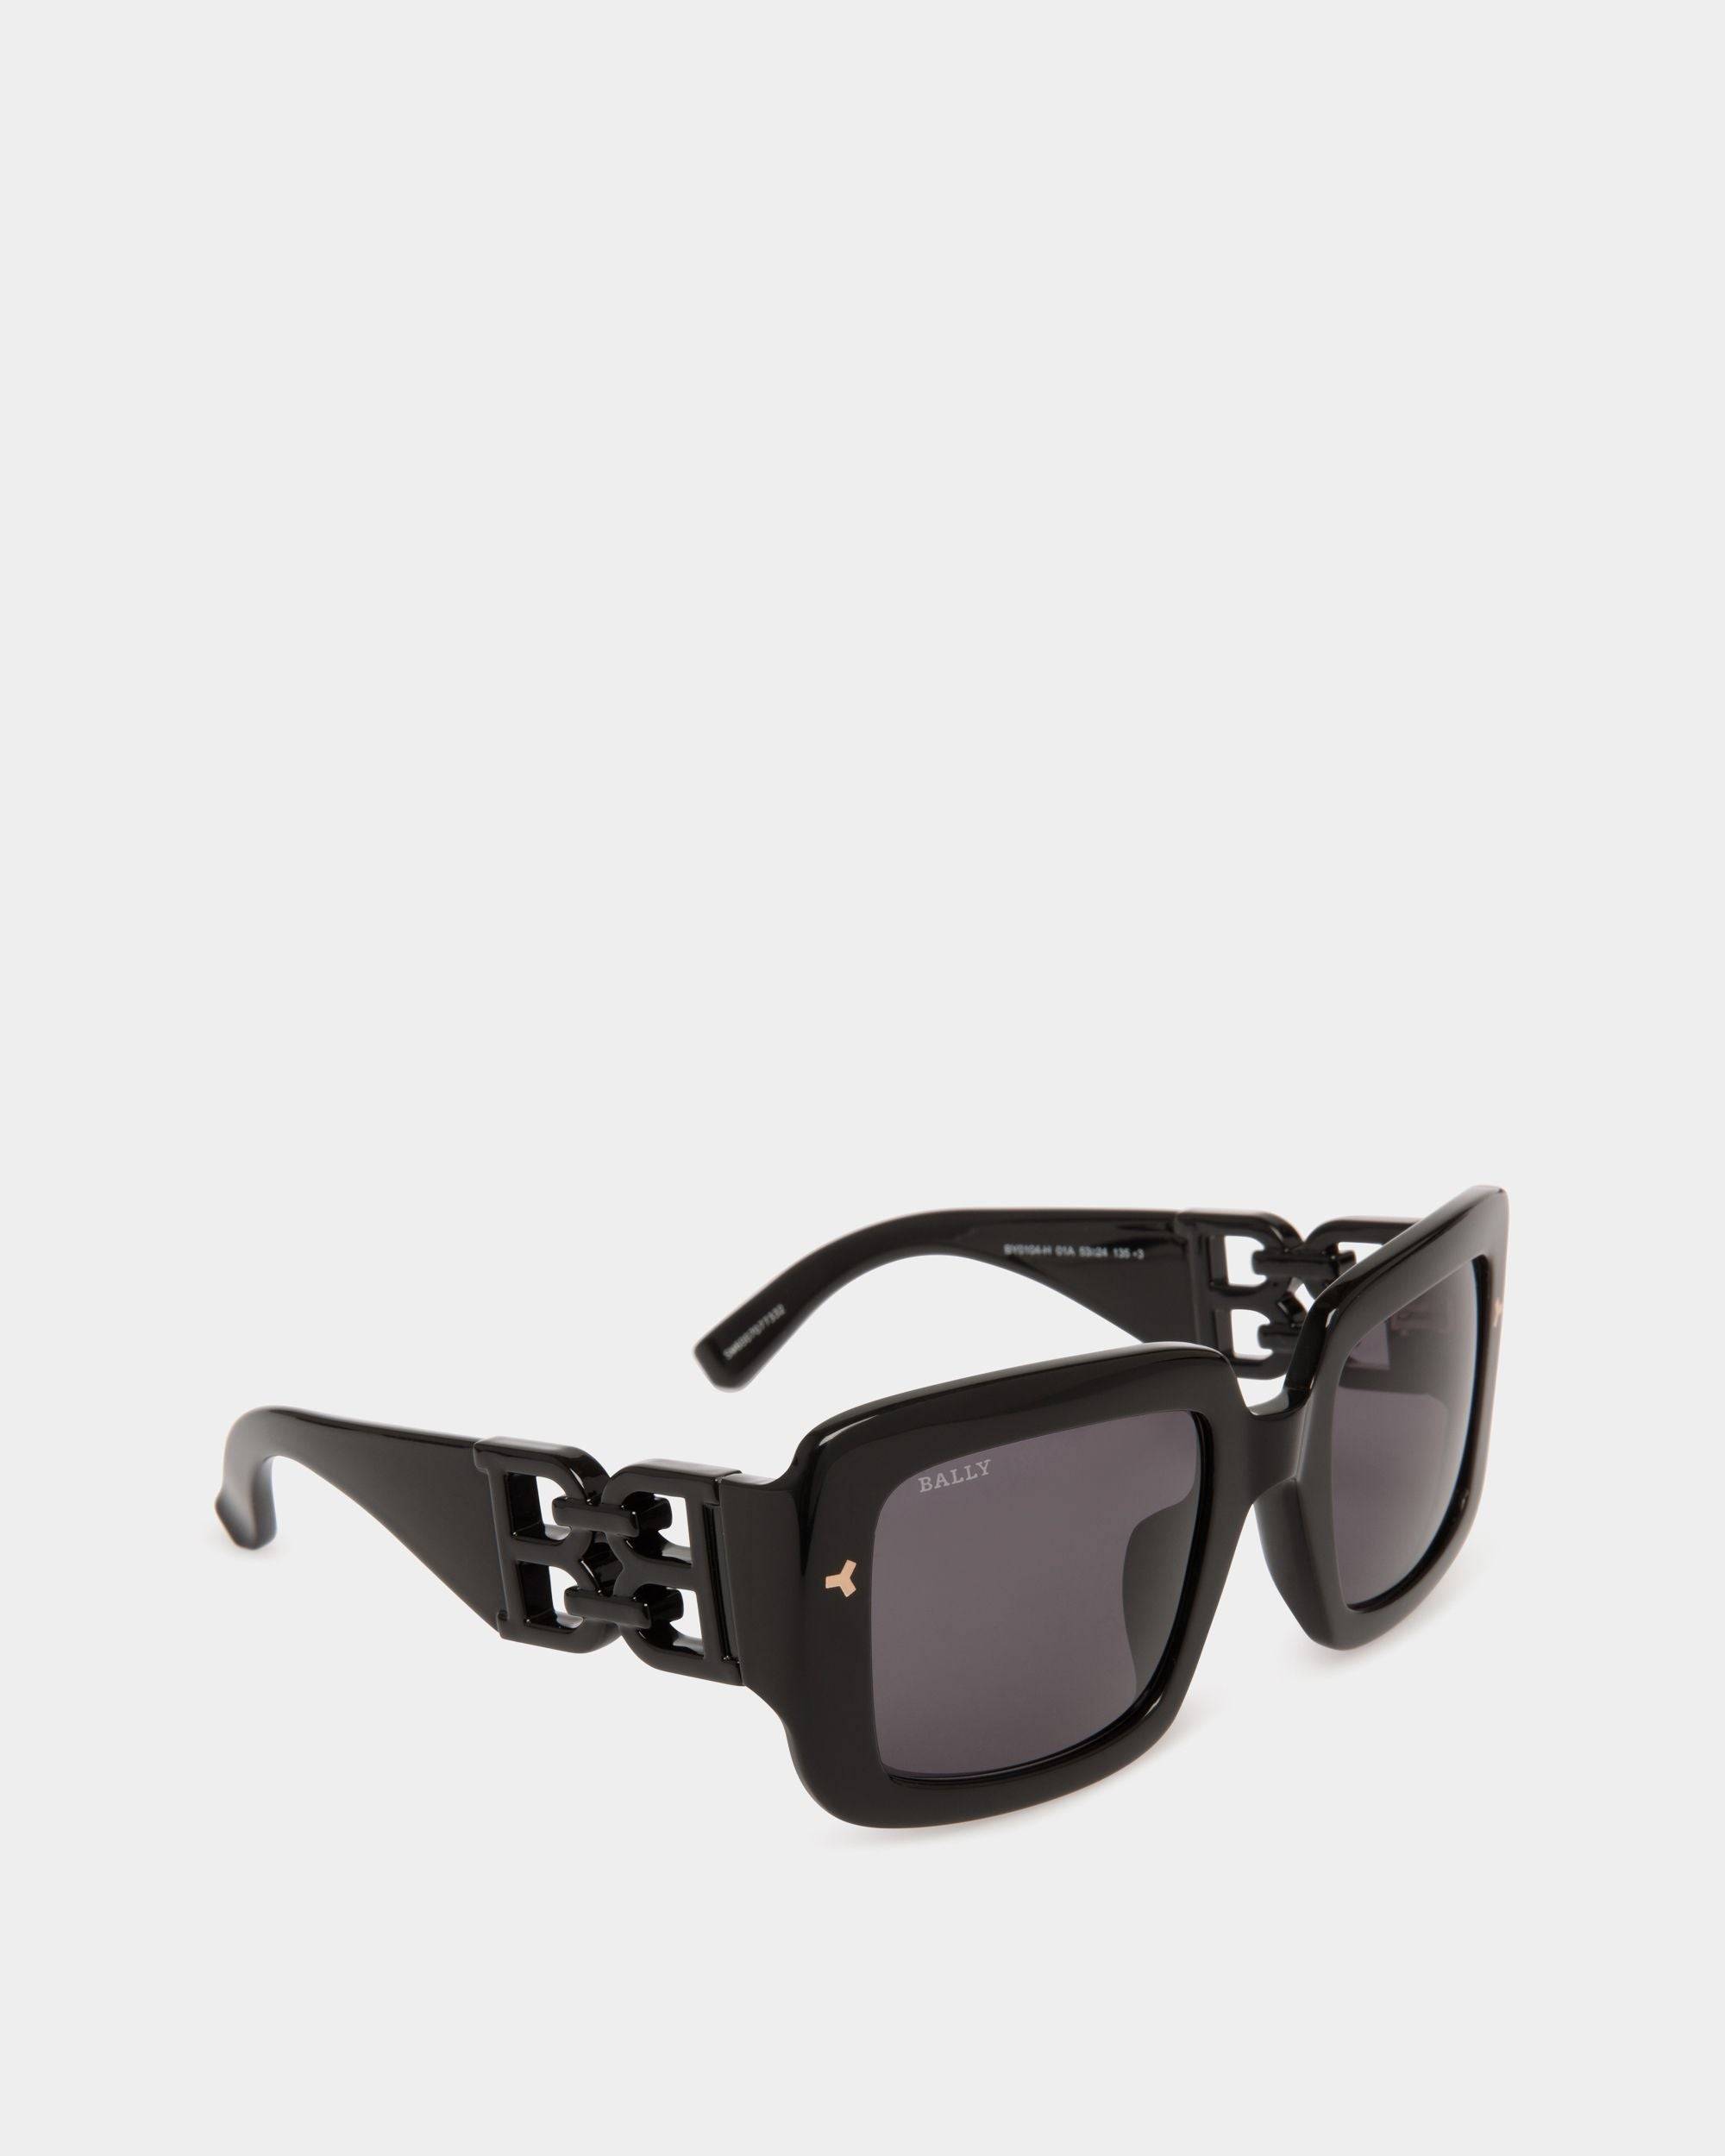 Filiana Sunglasses in Black & Smoke Lenses Acetate Sunglasses In Black - Women's - Bally - 02